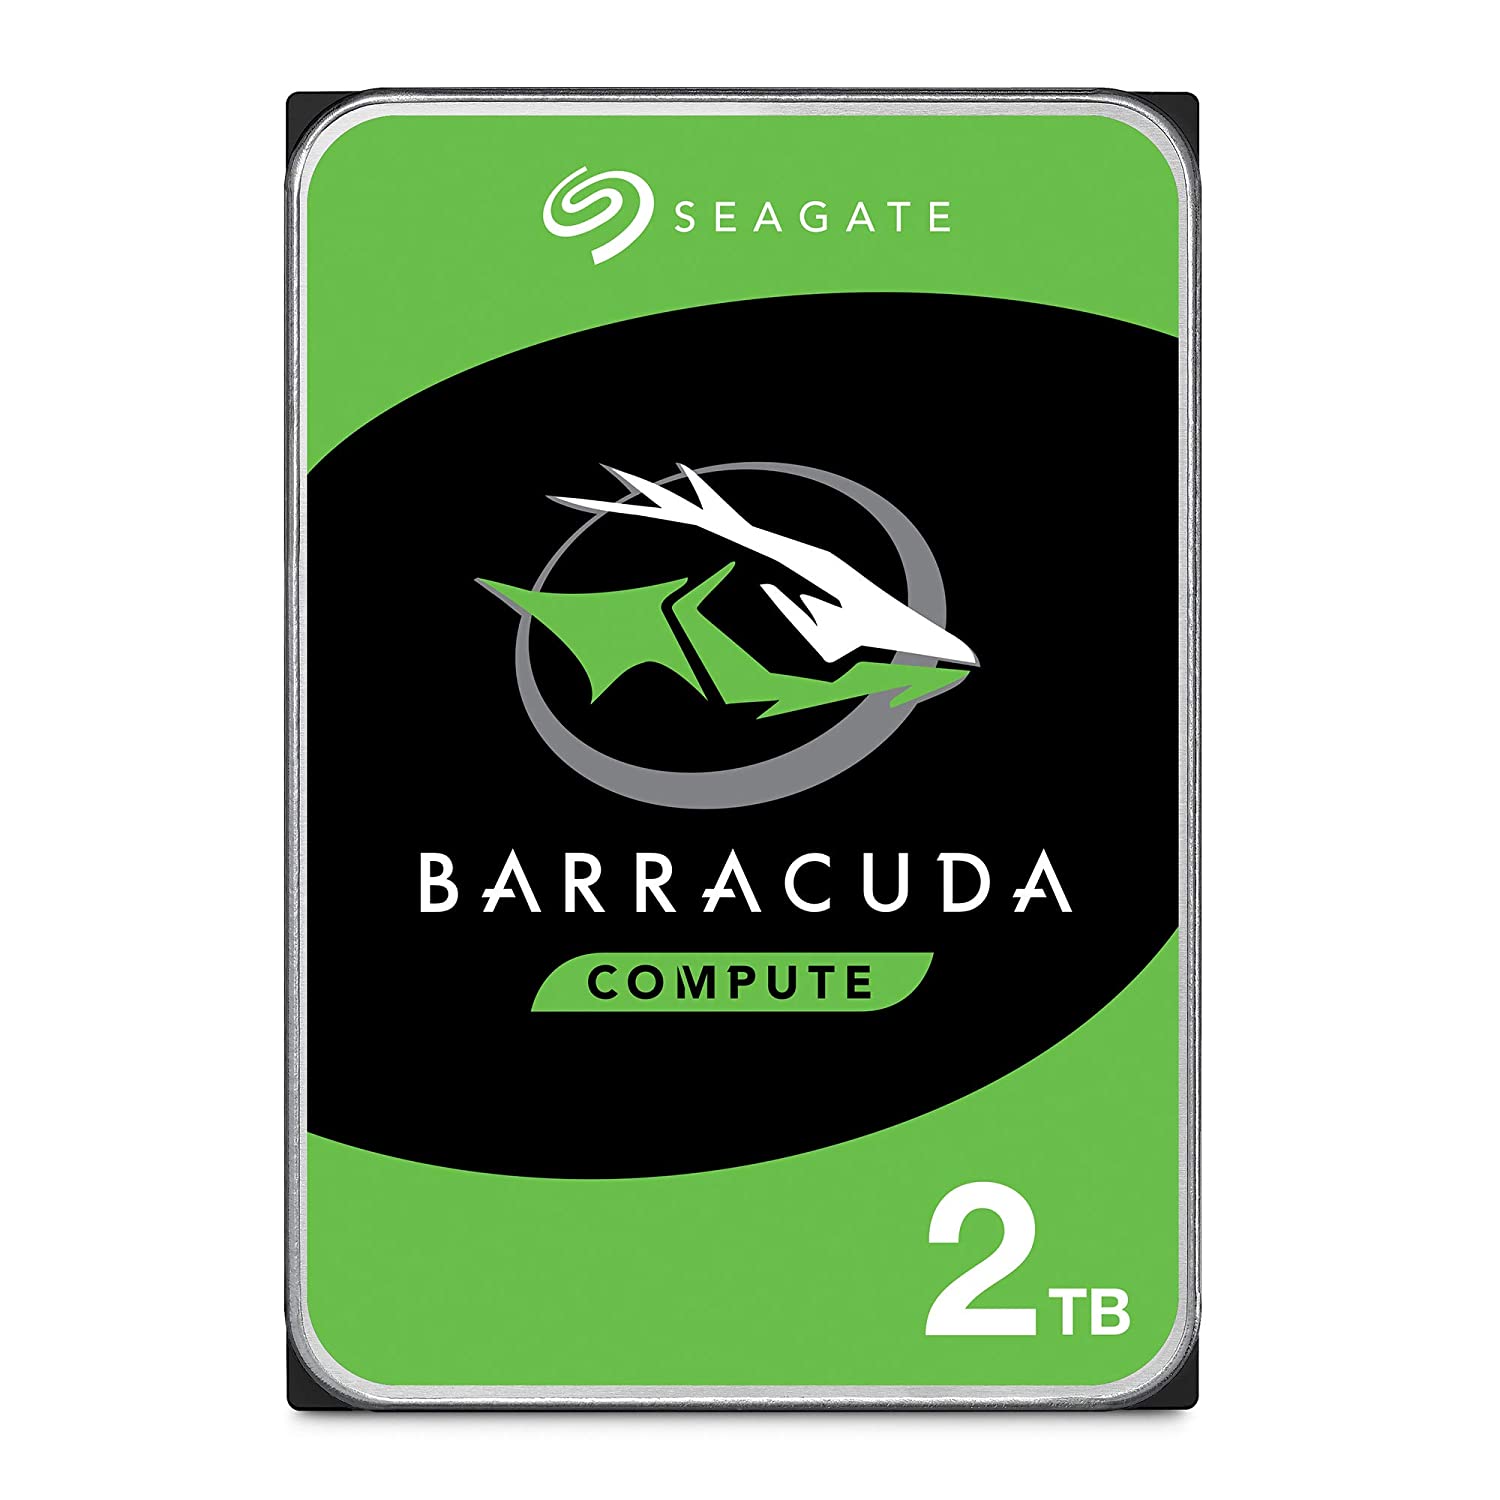 Seagate Barracuda 2 TB Internal Hard Drive SATA